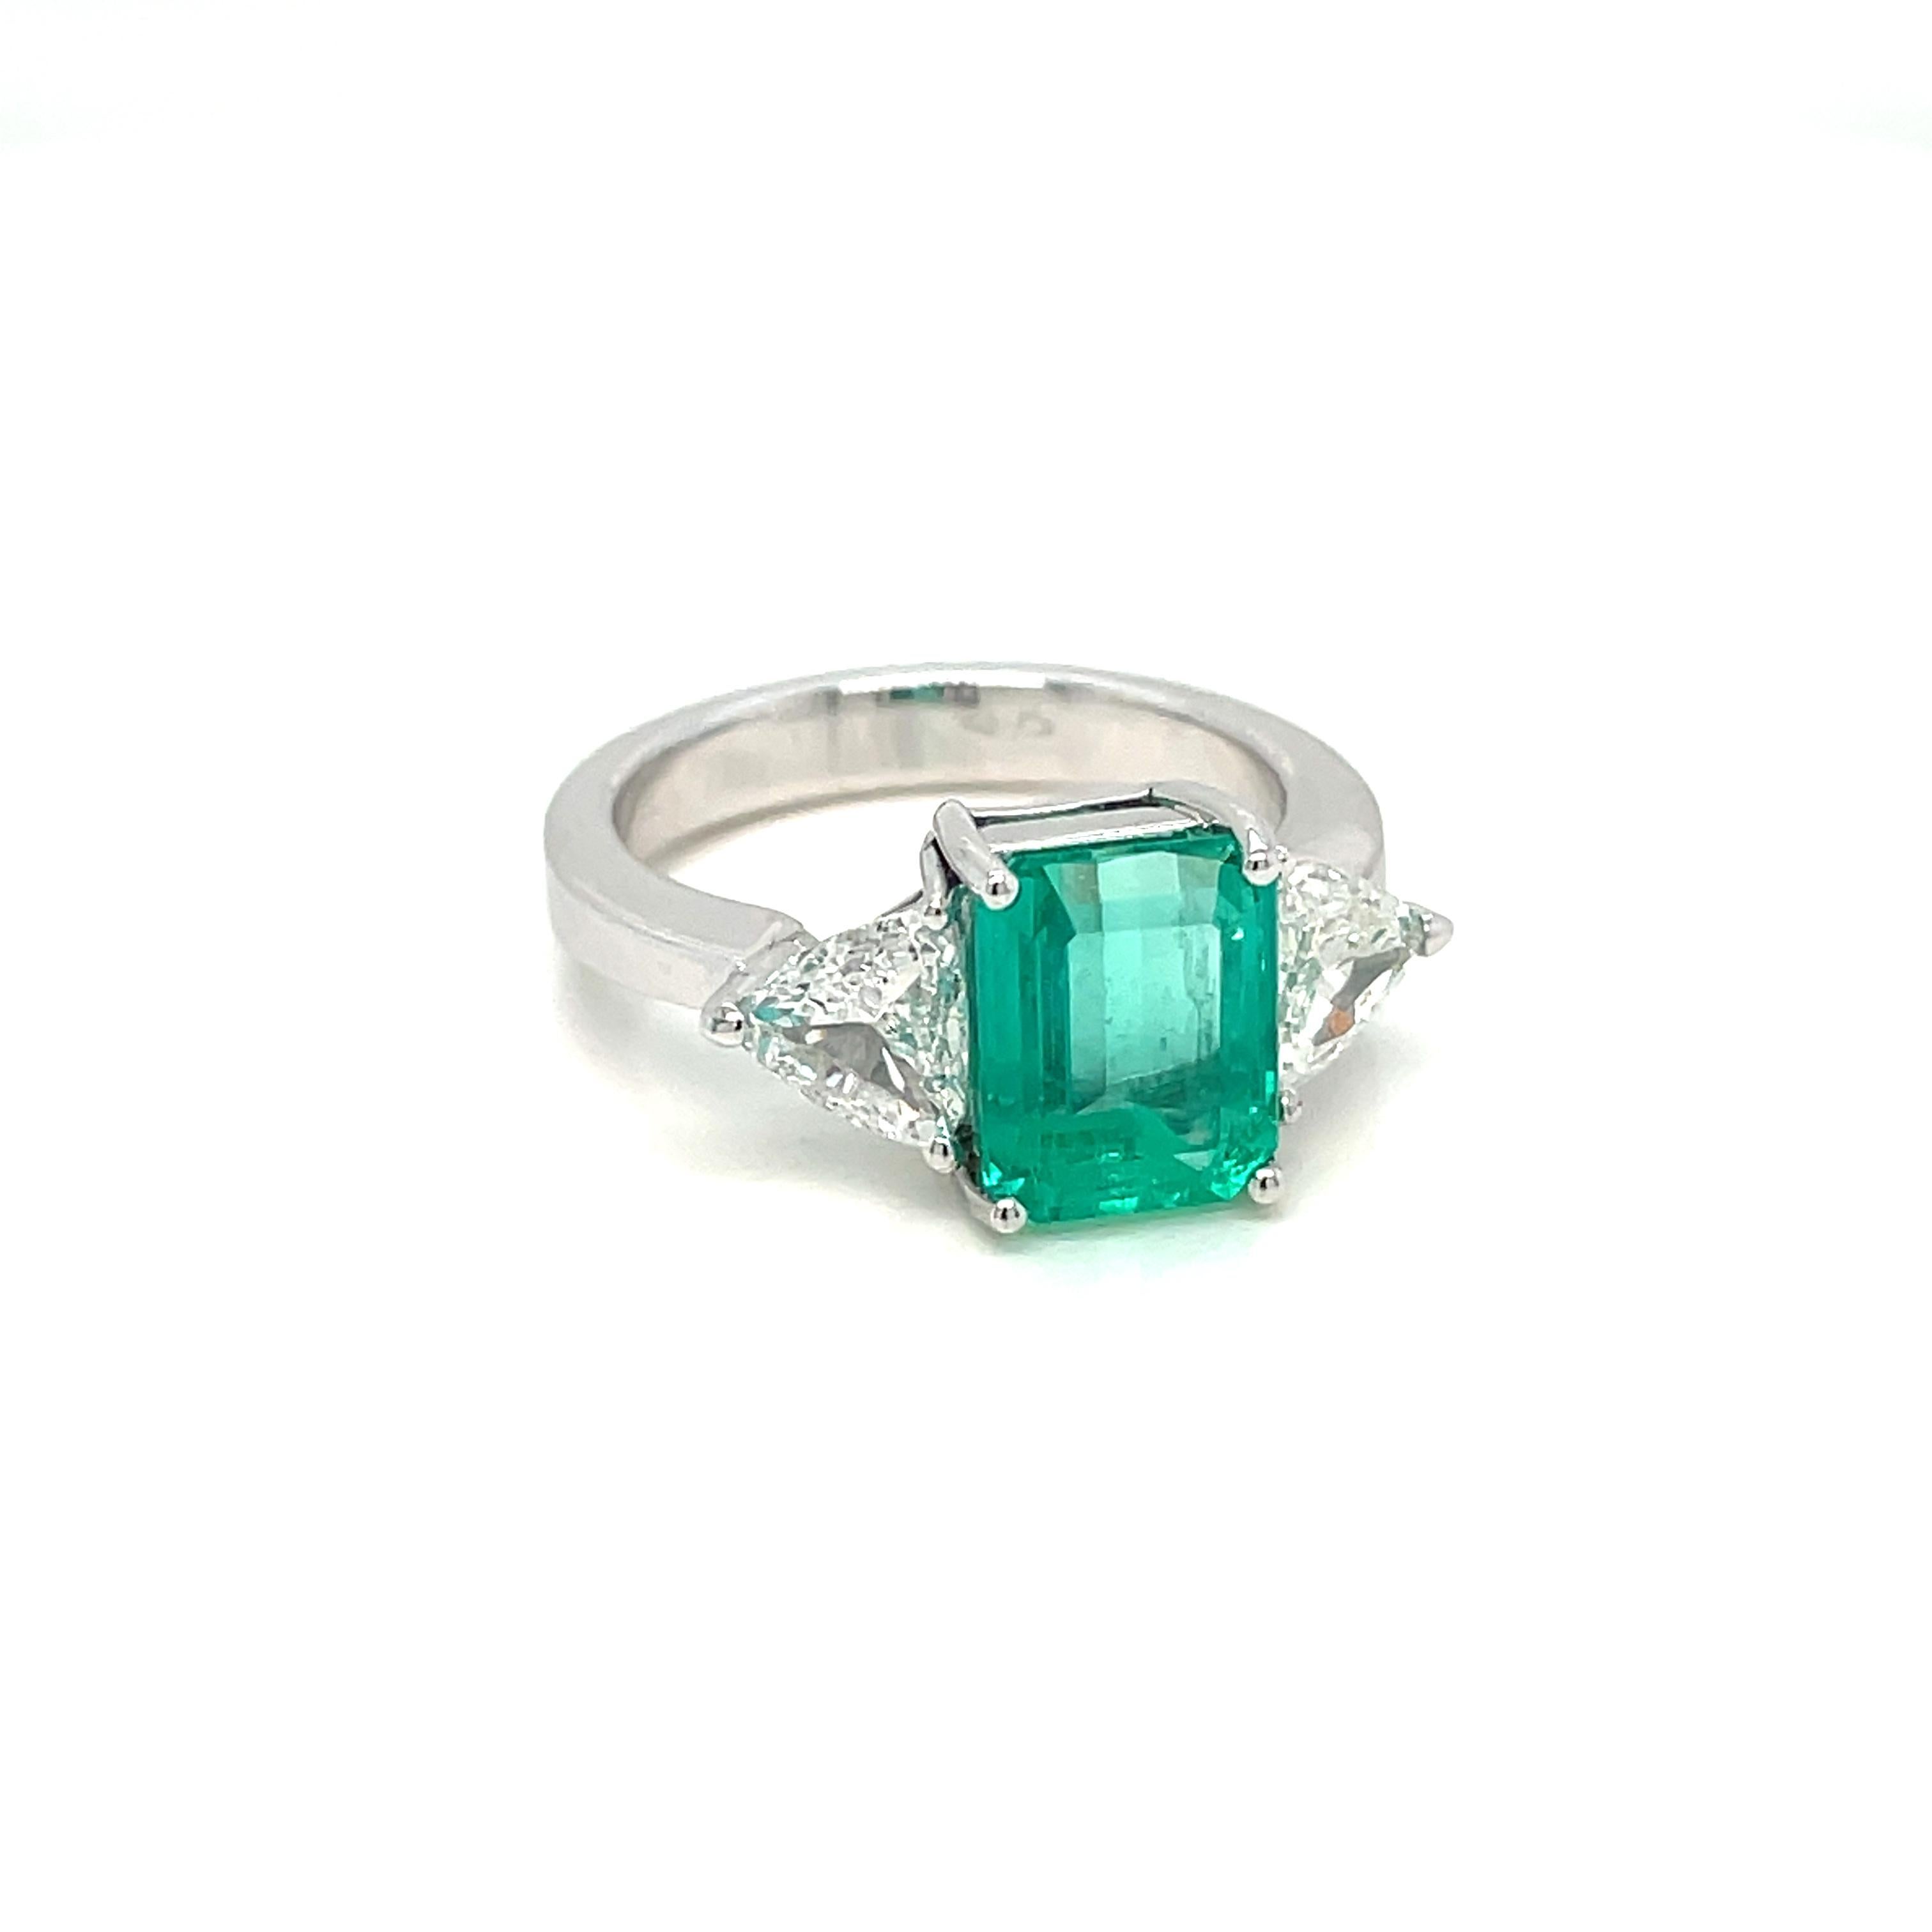 Emerald Cut Certified 2.93 Carat Colombian Natural Emerald Diamond Ring